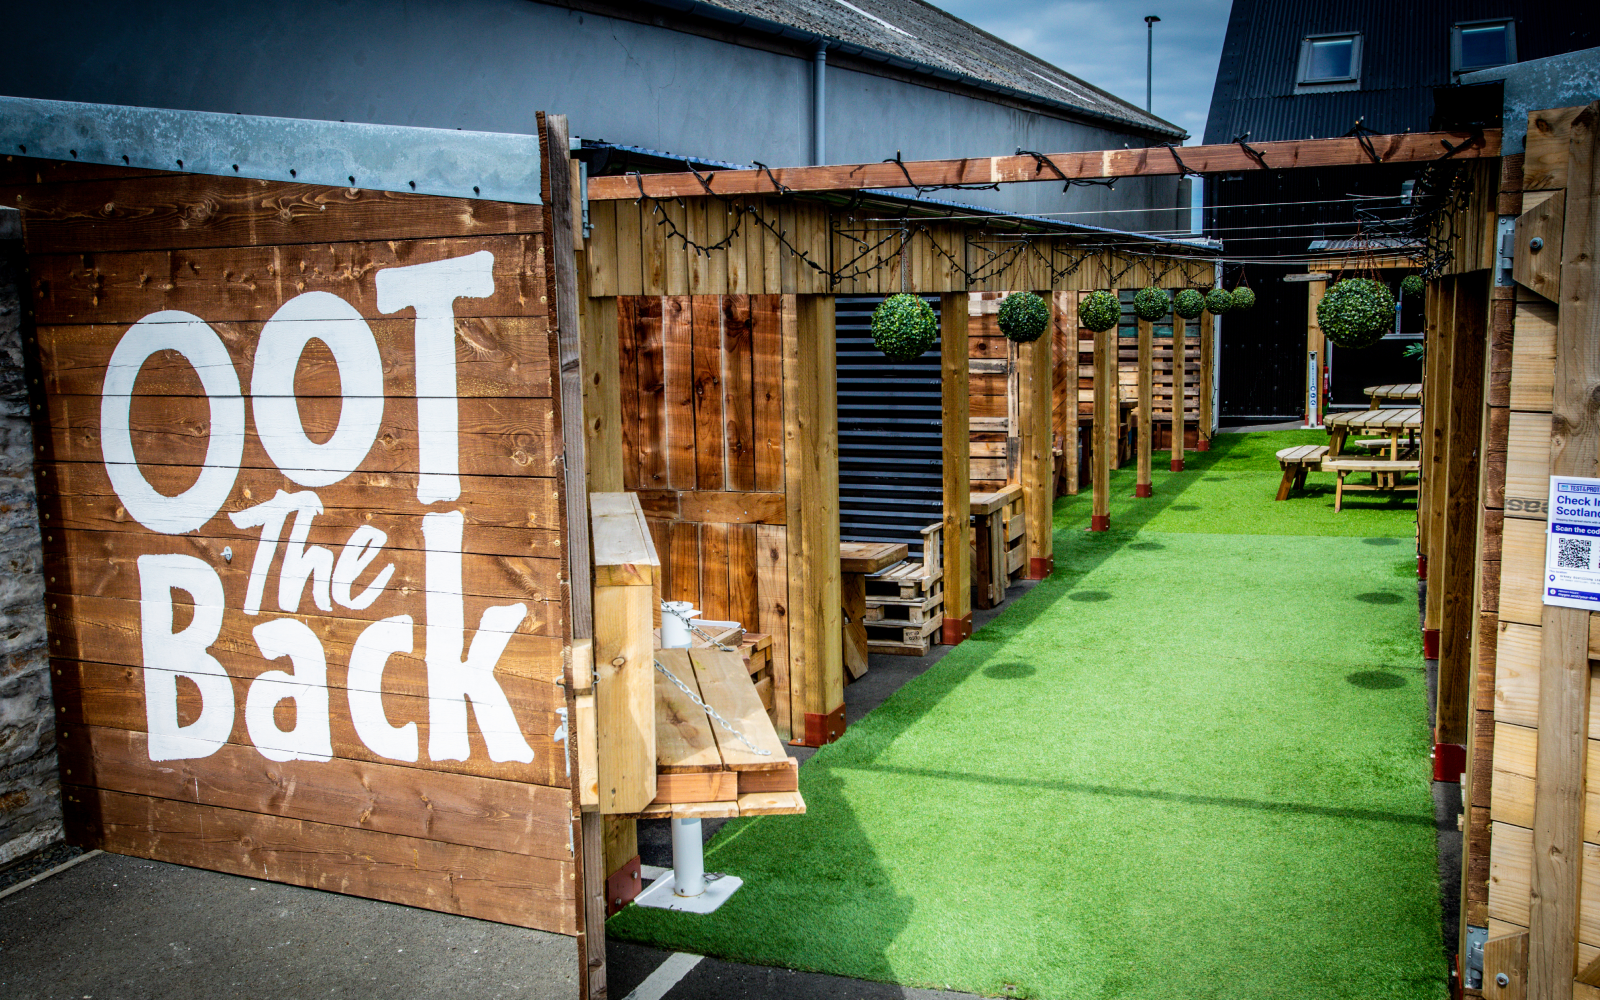 Oot the Back - Orkney Distilling's outdoor garden bar